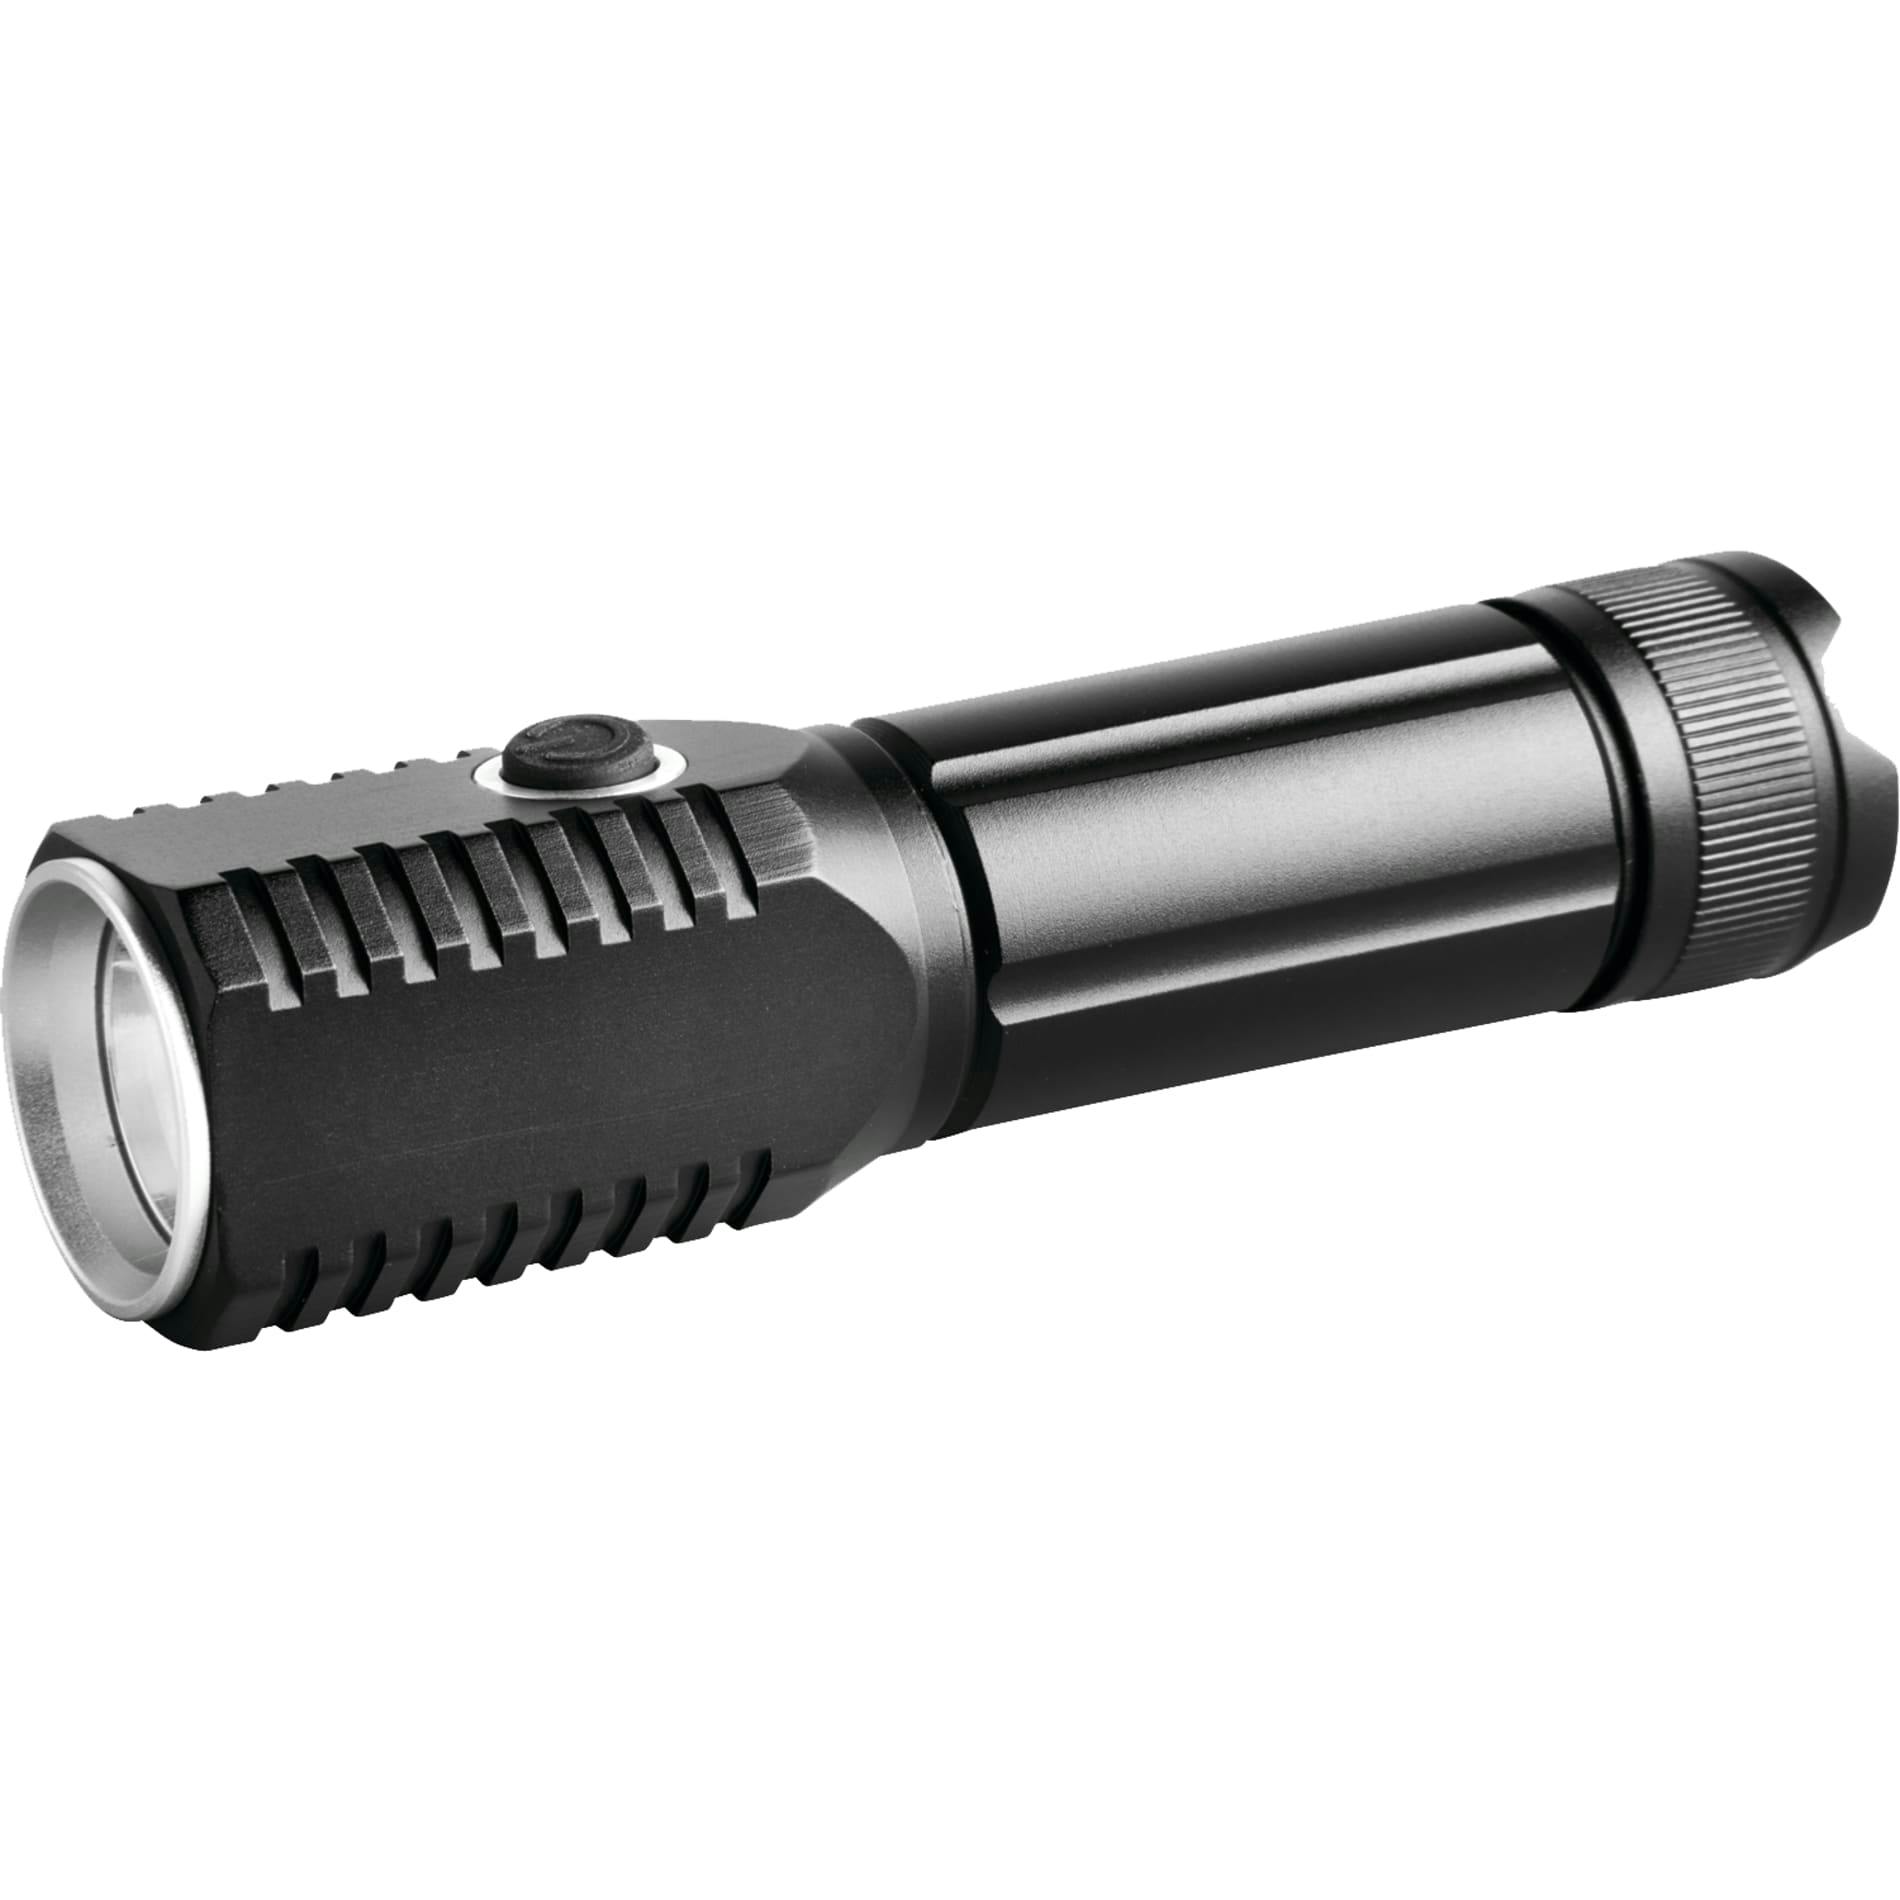 High Sierra® 3W CREE XPE LED Flashlight - additional Image 6